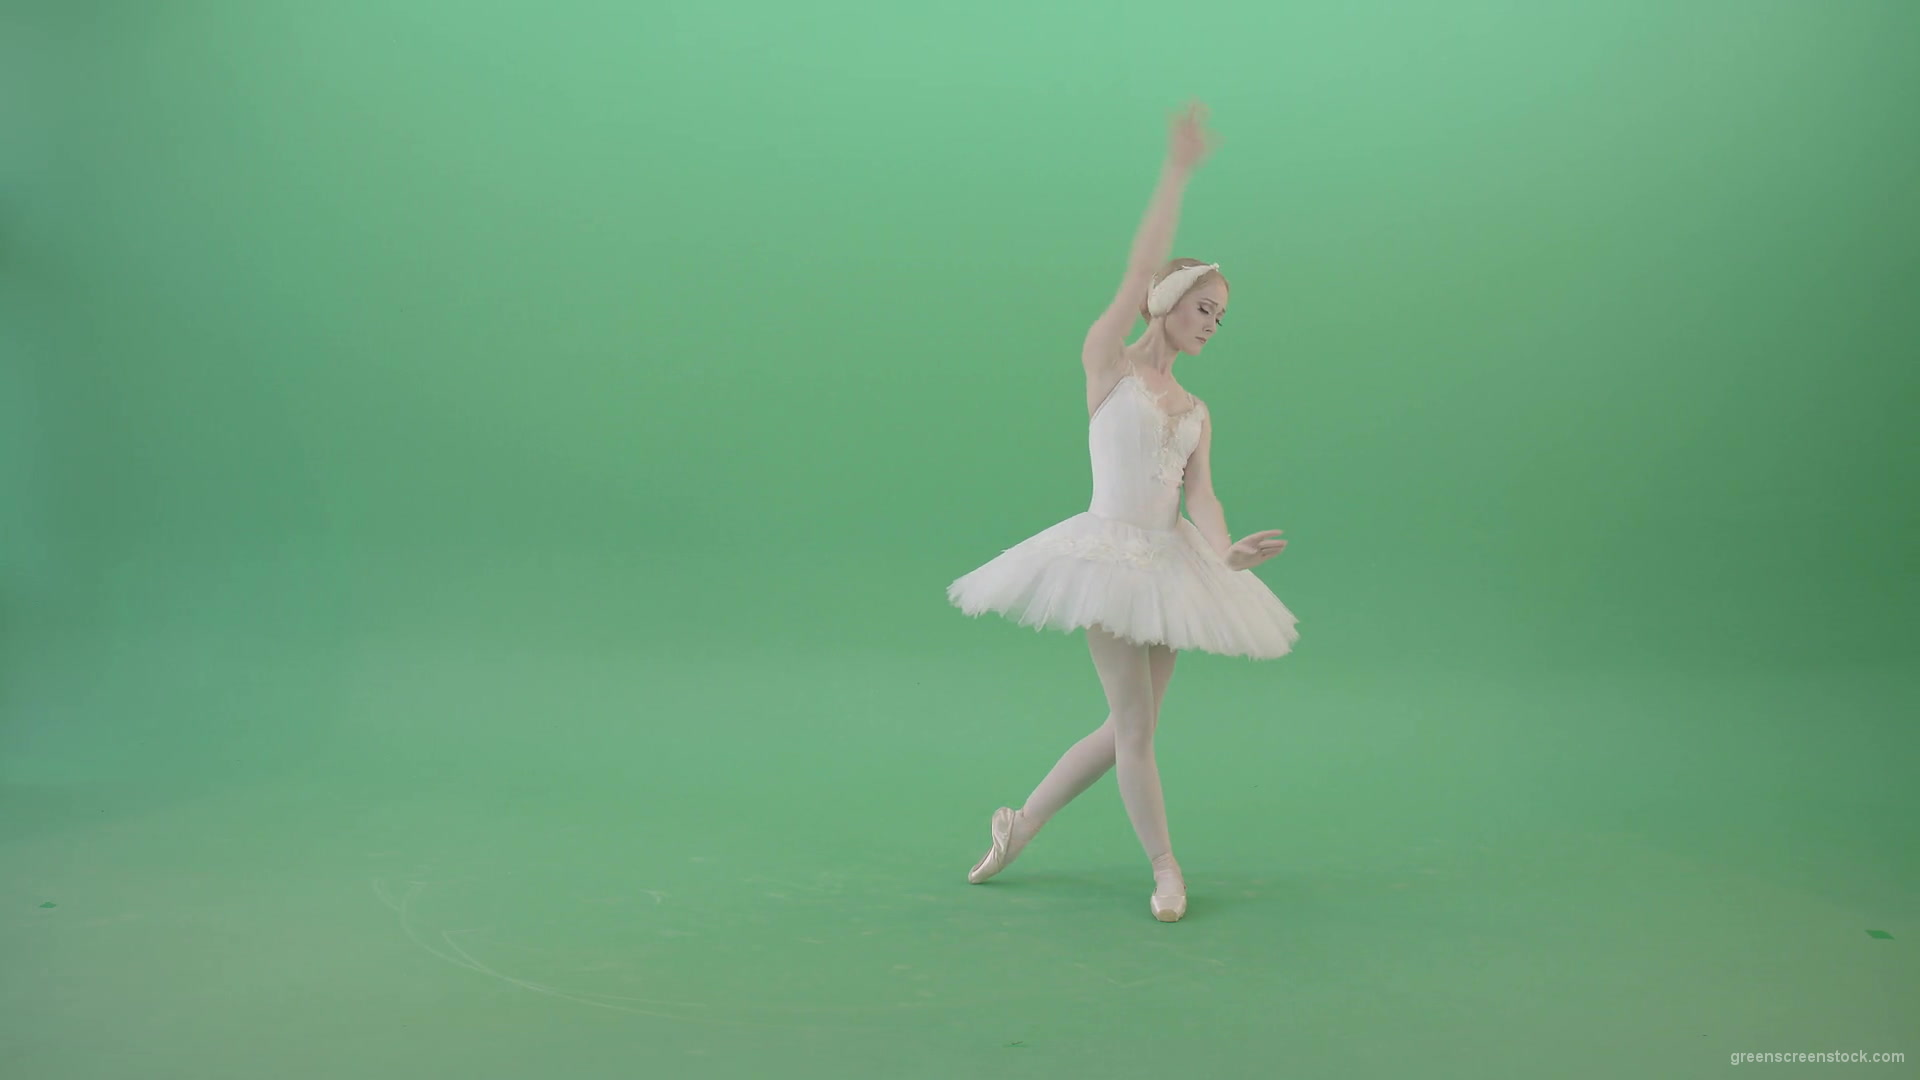 Grace-Ballerina-dance-classical-ballet-art-in-white-costume-on-green-screen-4K-Video-Footage-1920_009 Green Screen Stock